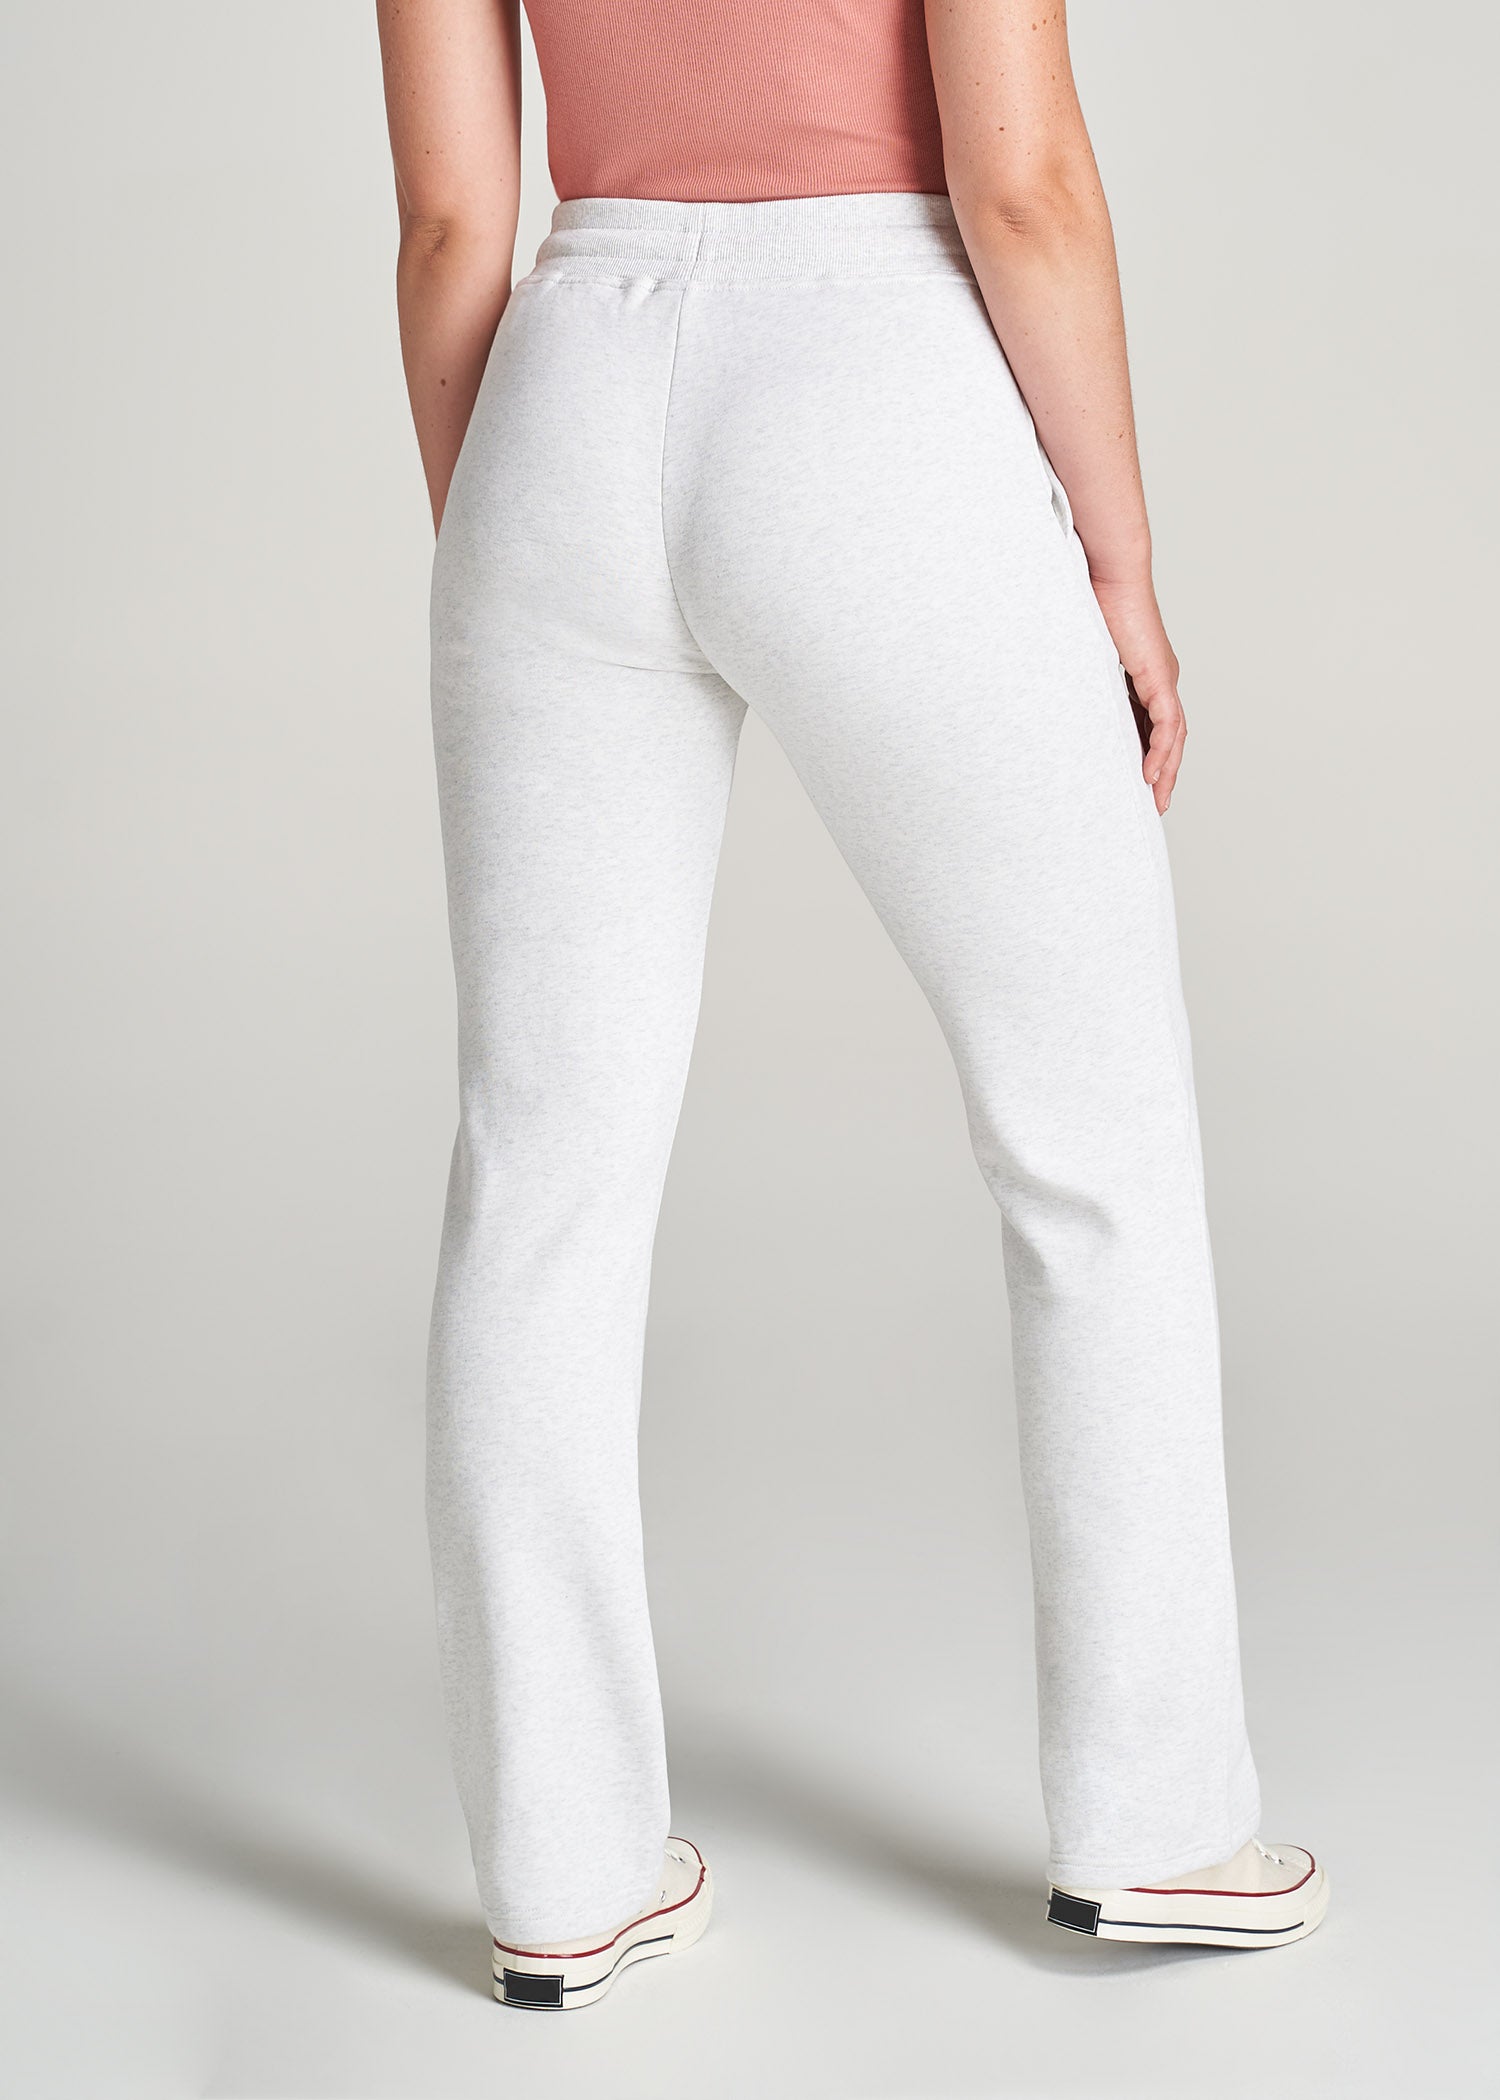 Sweatpants, Women's Fleece Pants